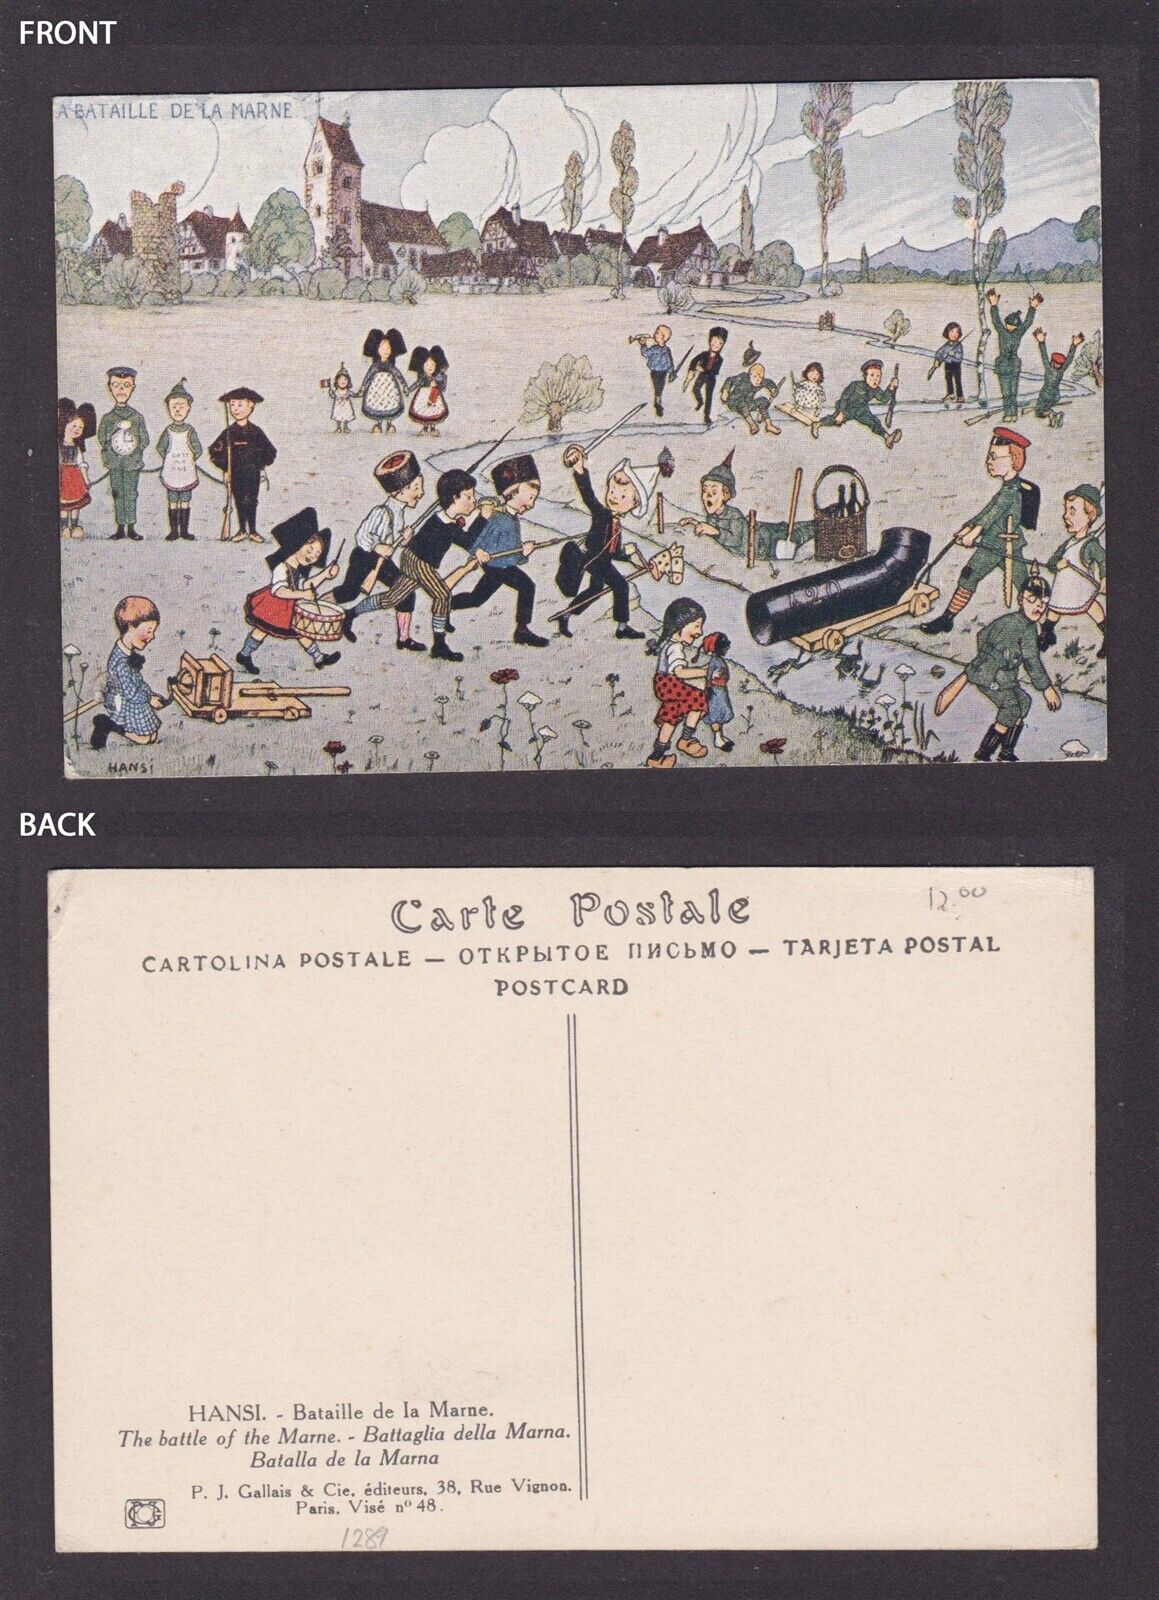 FRANCE, Postcard, Hansi, The battle of the Marne, Propaganda, WWI